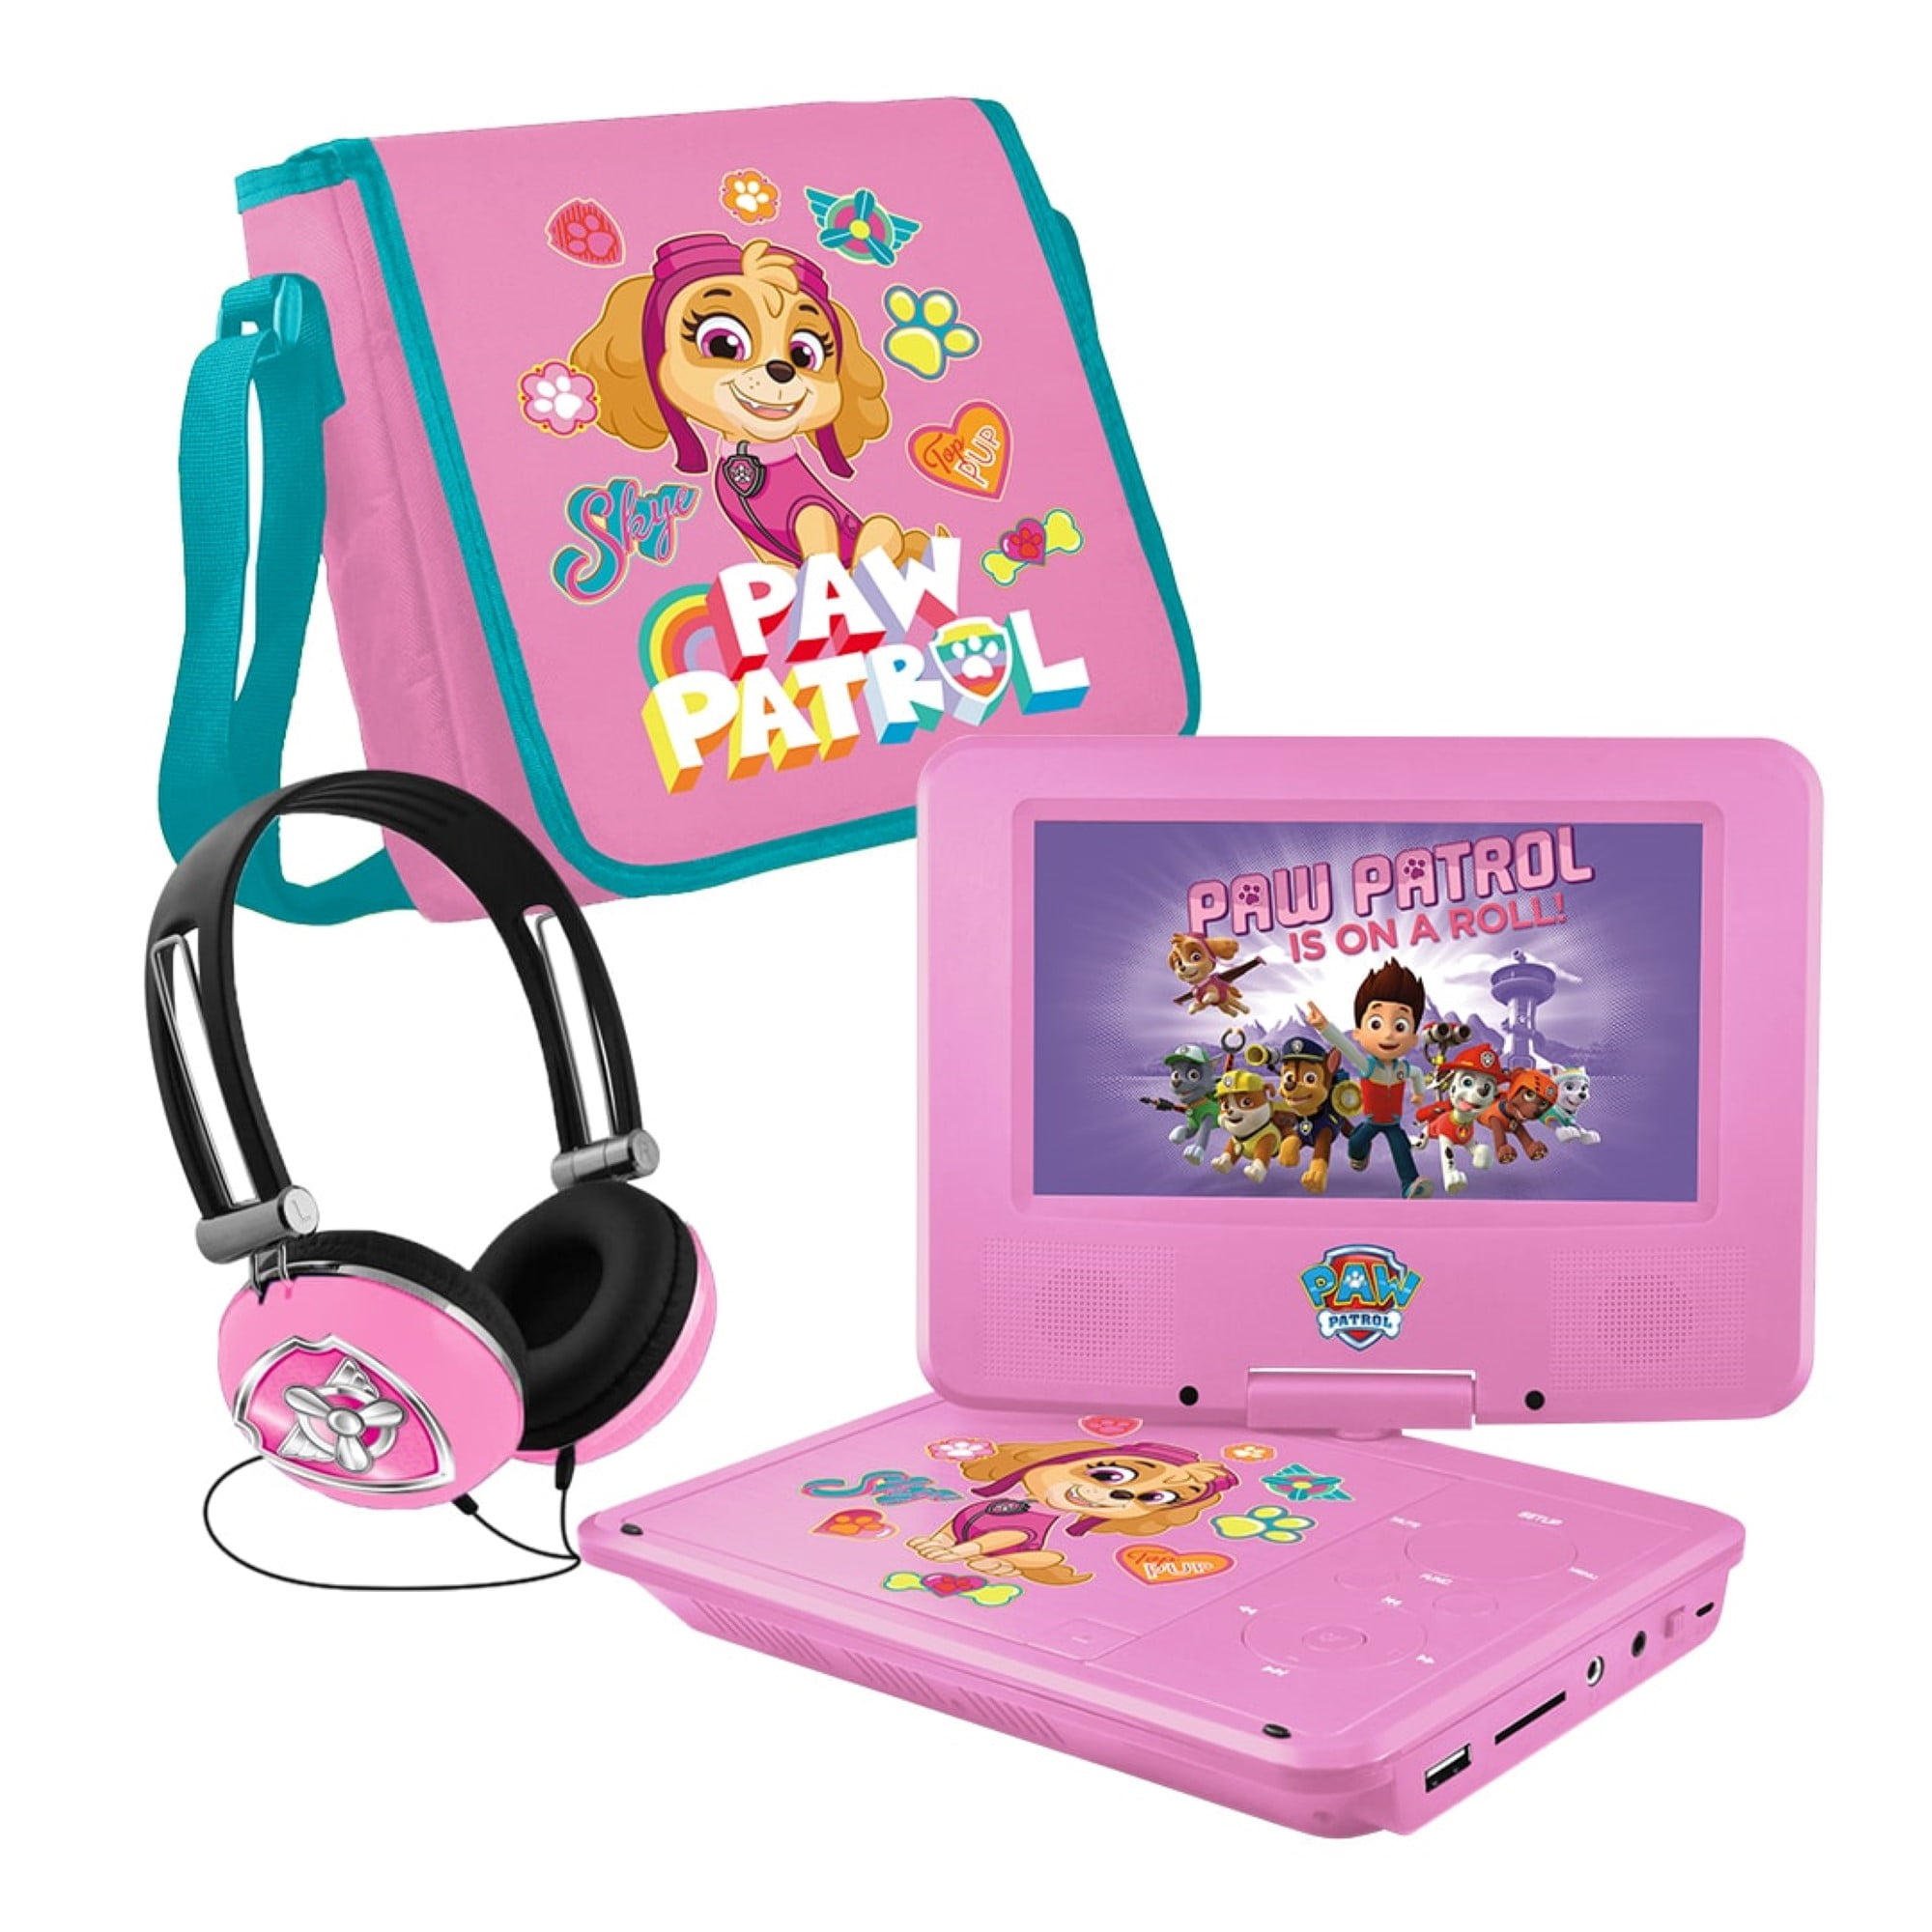 PAW Patrol 7" Portable DVD with Matching + Carrying Bag - Pink - Walmart.com